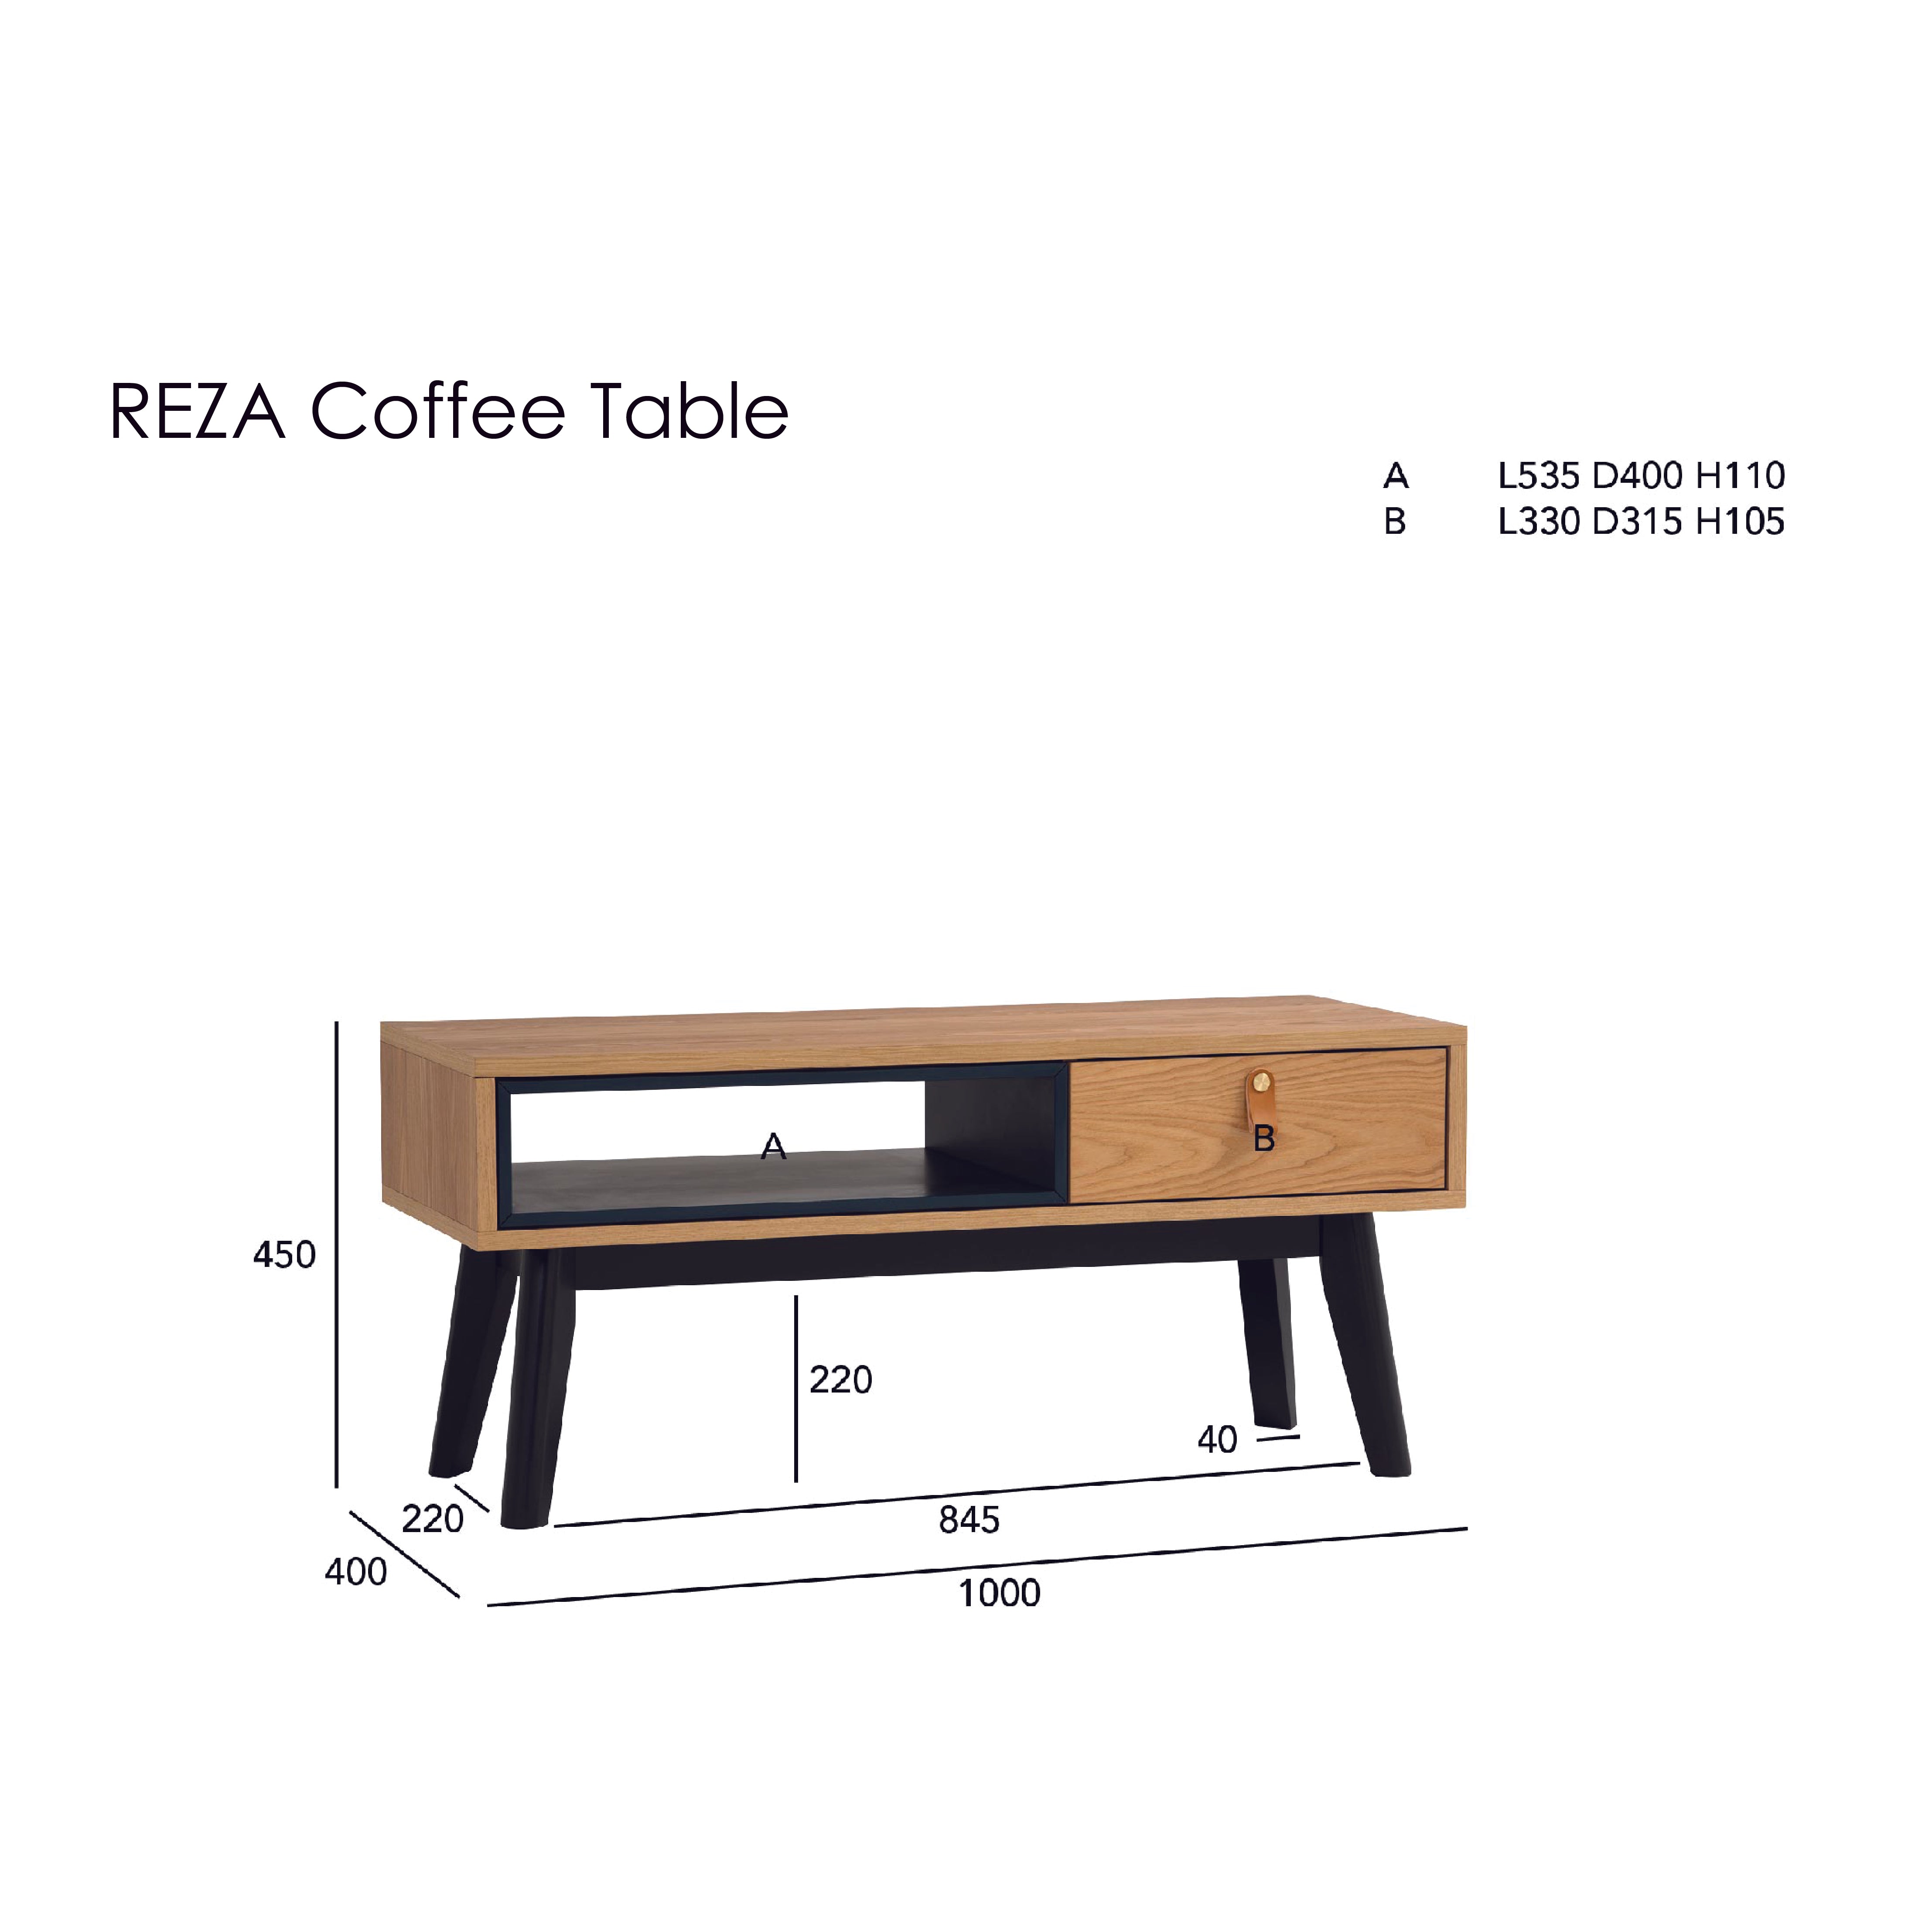 REZA Coffee Table